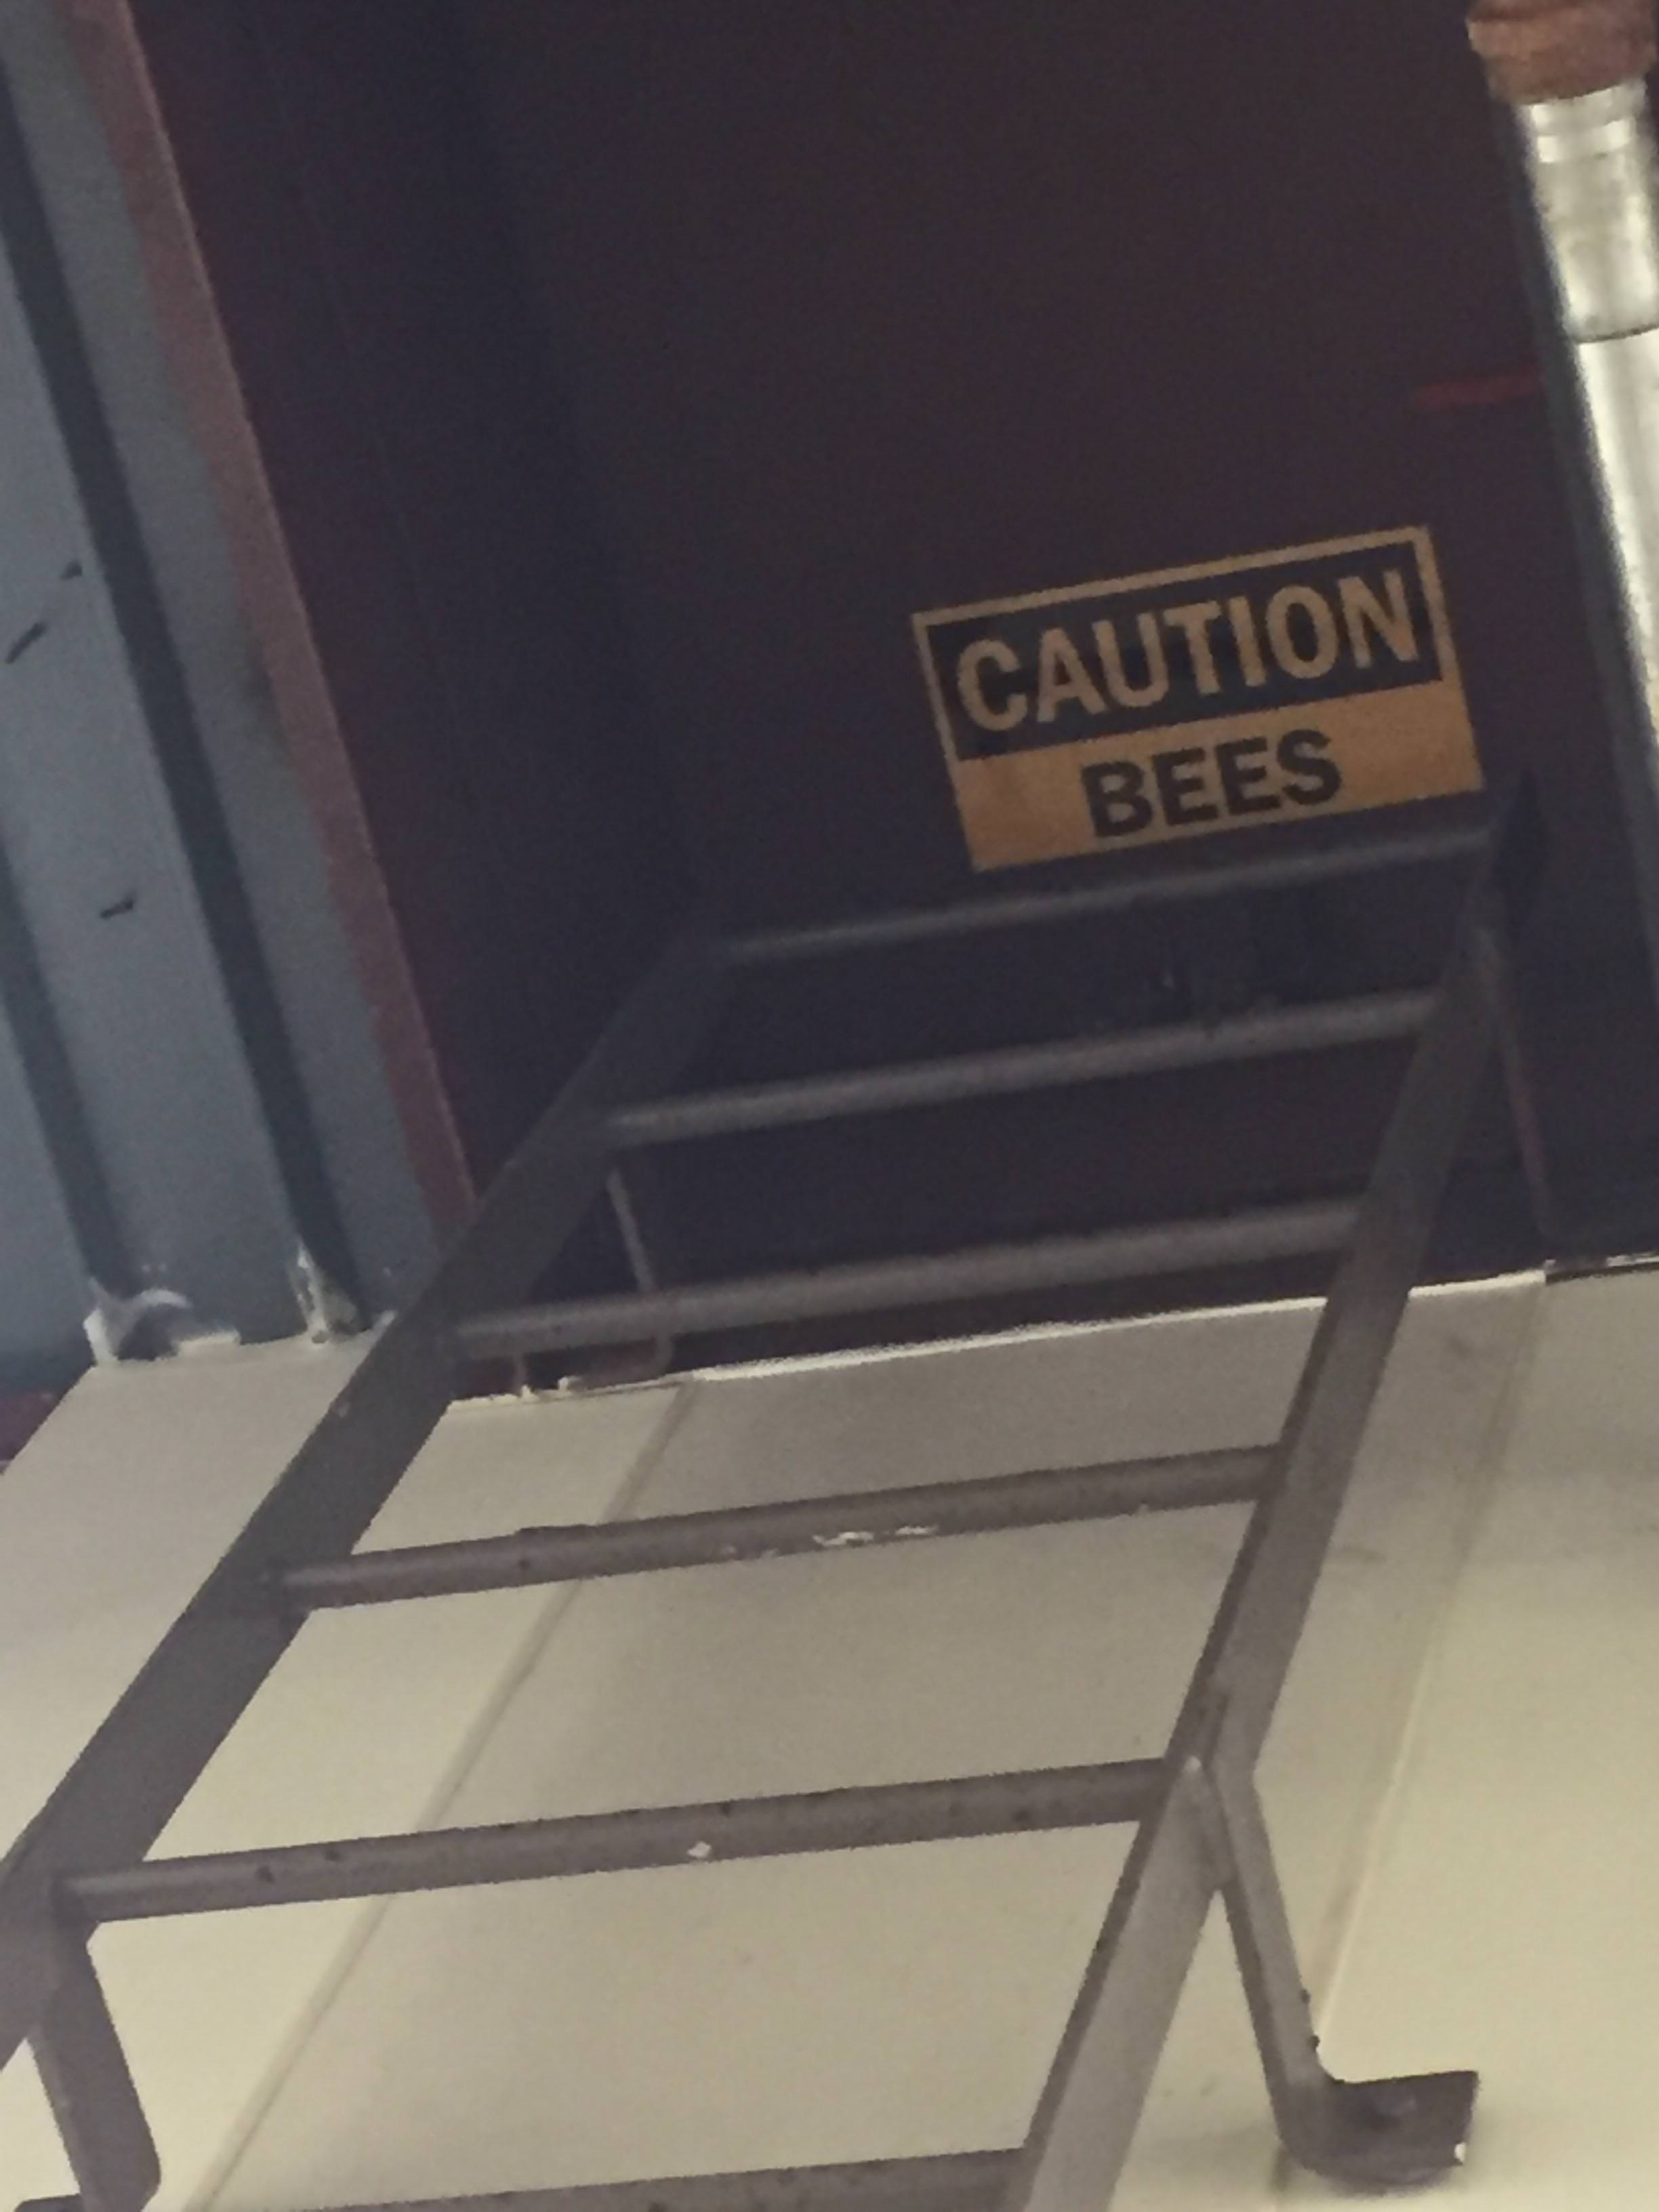 caution hot - Caution Bees